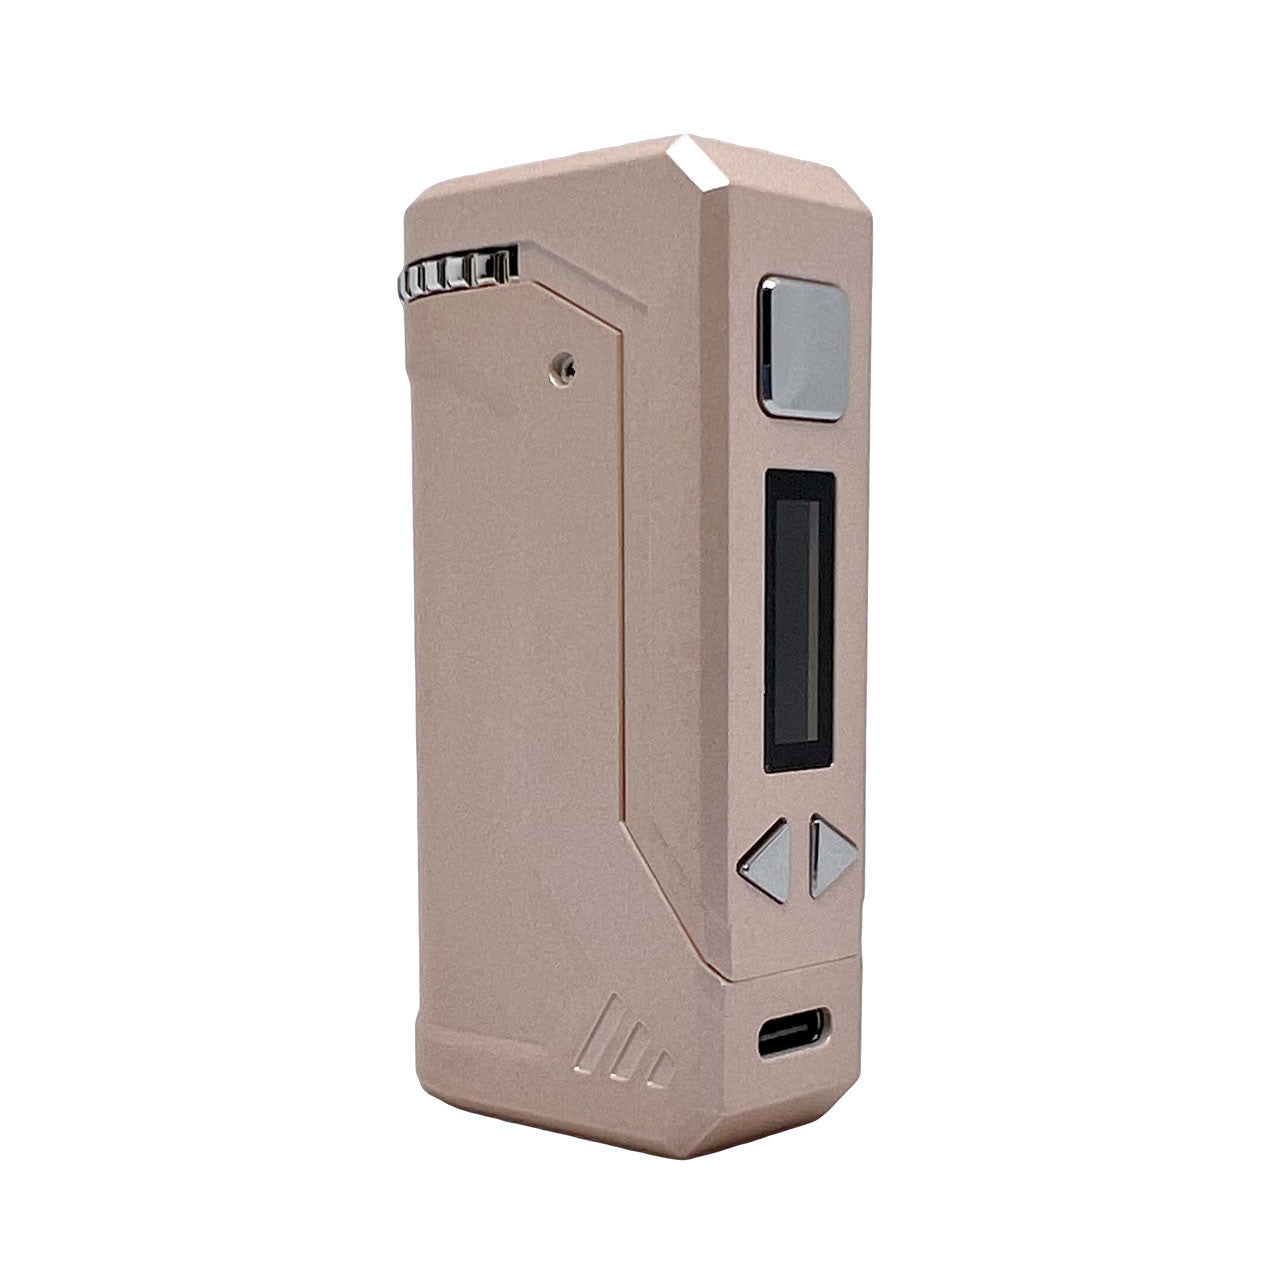 Yocan UNI Pro Plus 900mAh Variable Voltage Carto Battery Mod